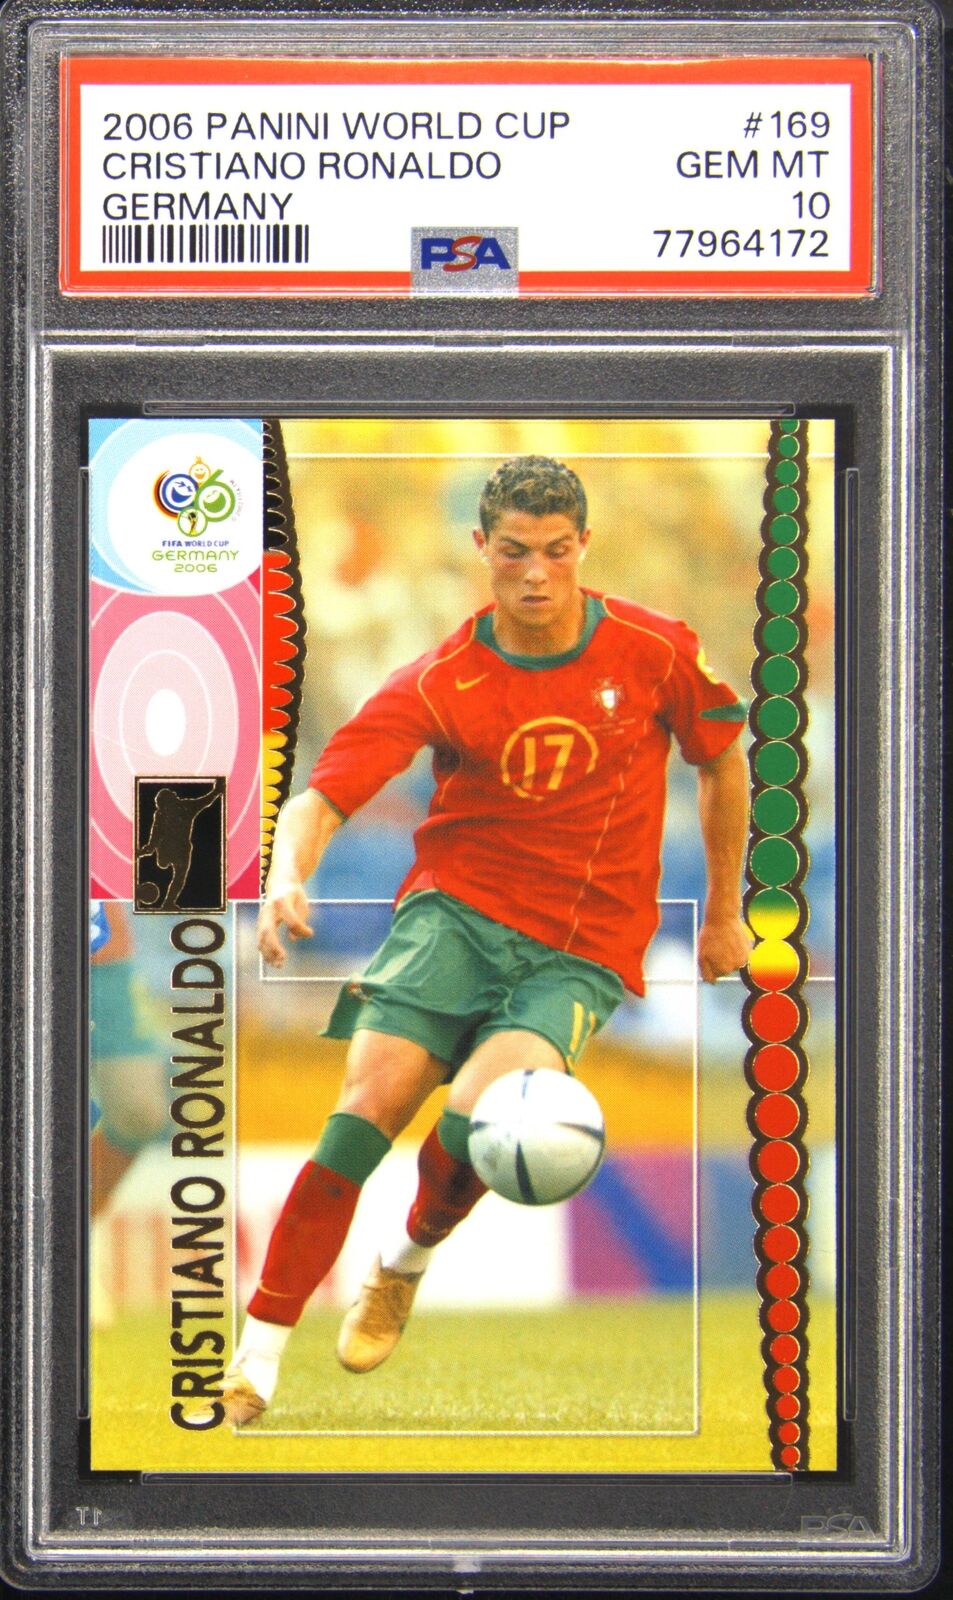 2006 Panini World Cup Germany #169 Cristiano Ronaldo PSA 10 Gem Mint Rookie RC